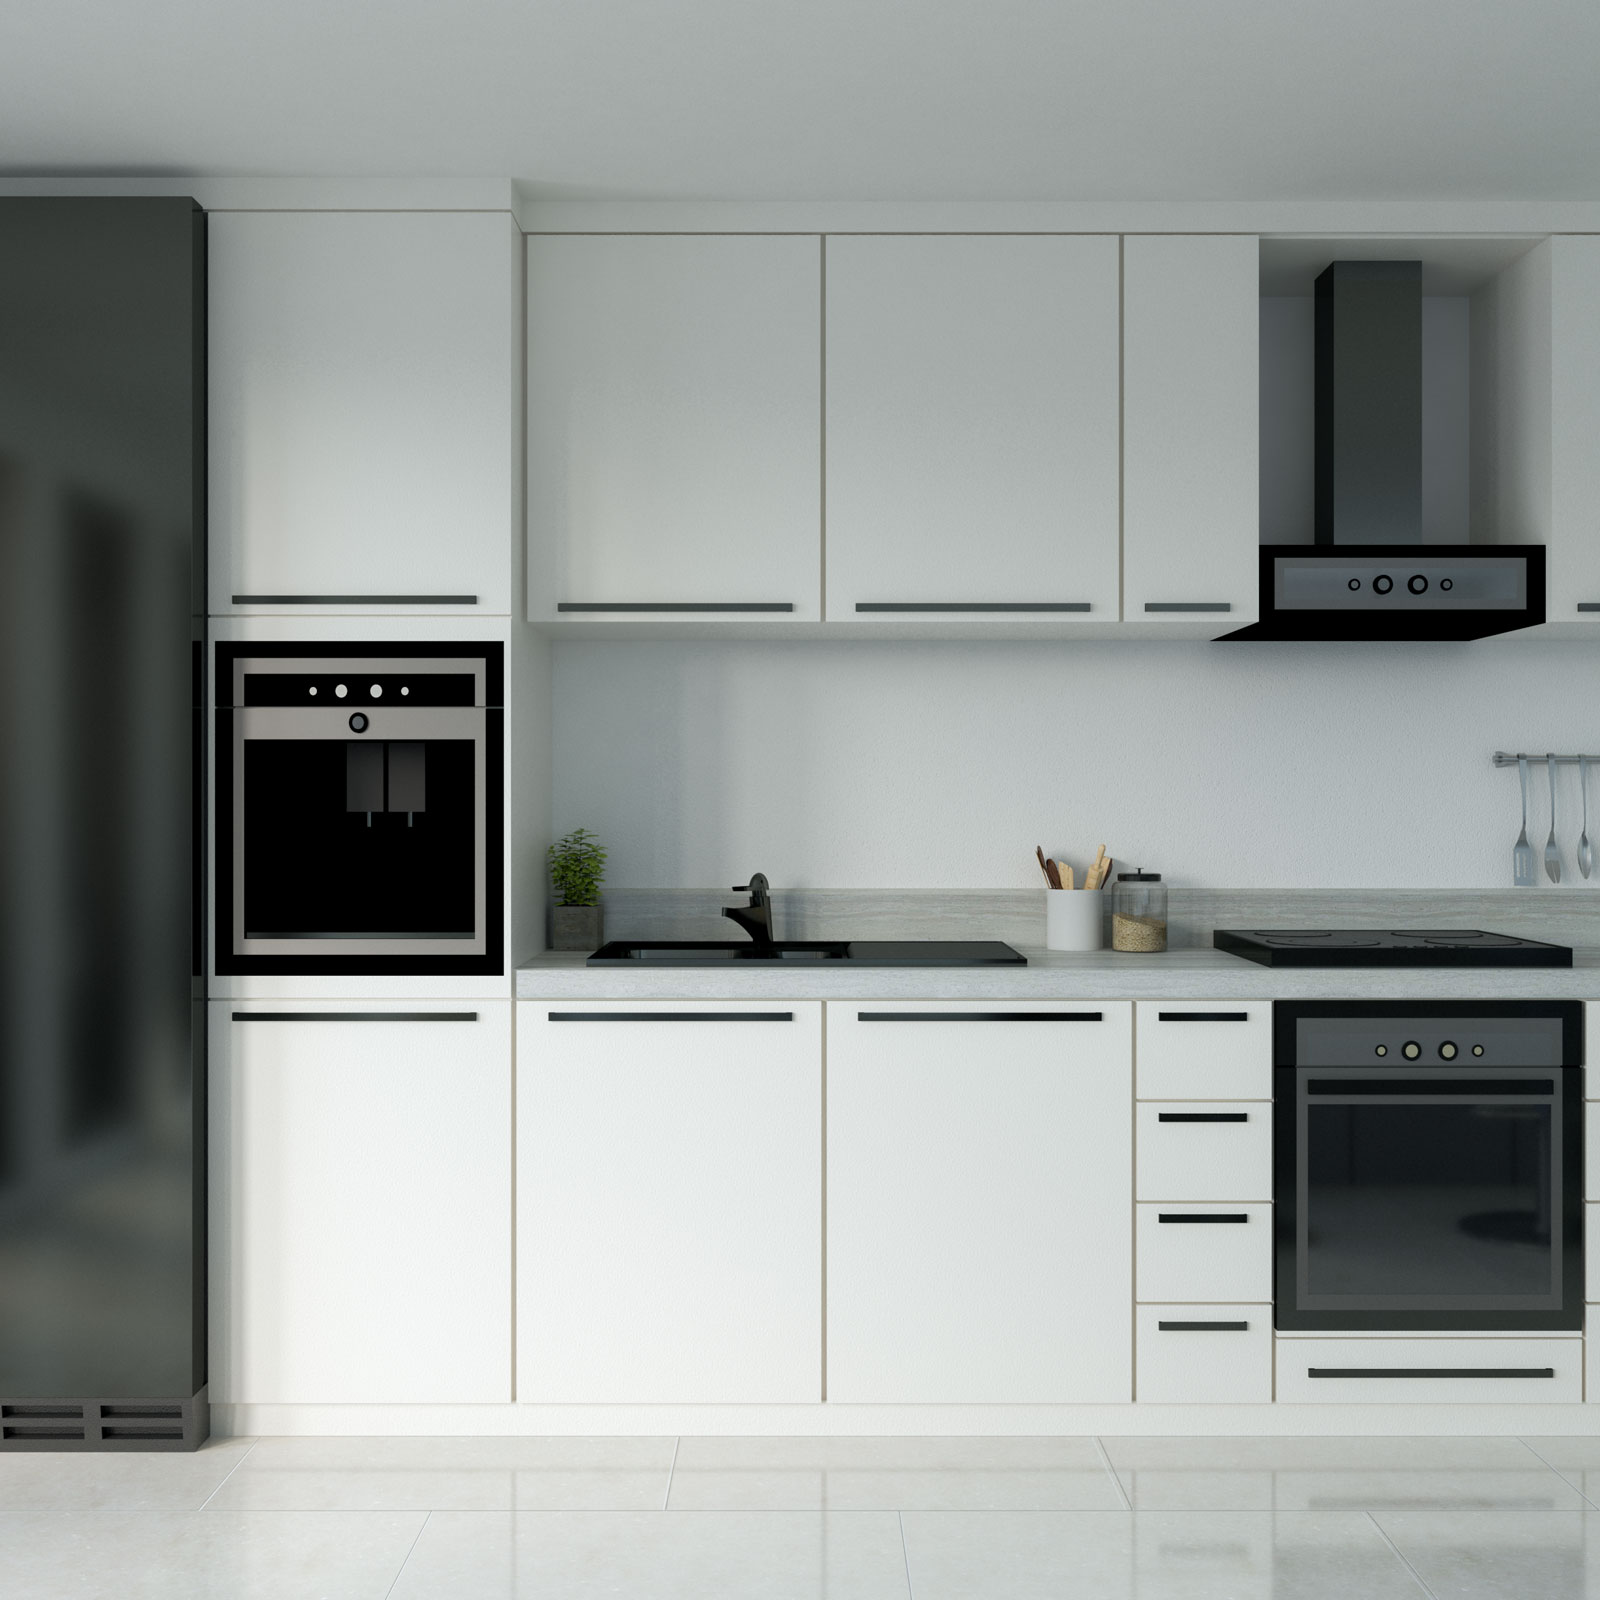 Warm white cabinets with black kitchen appliances